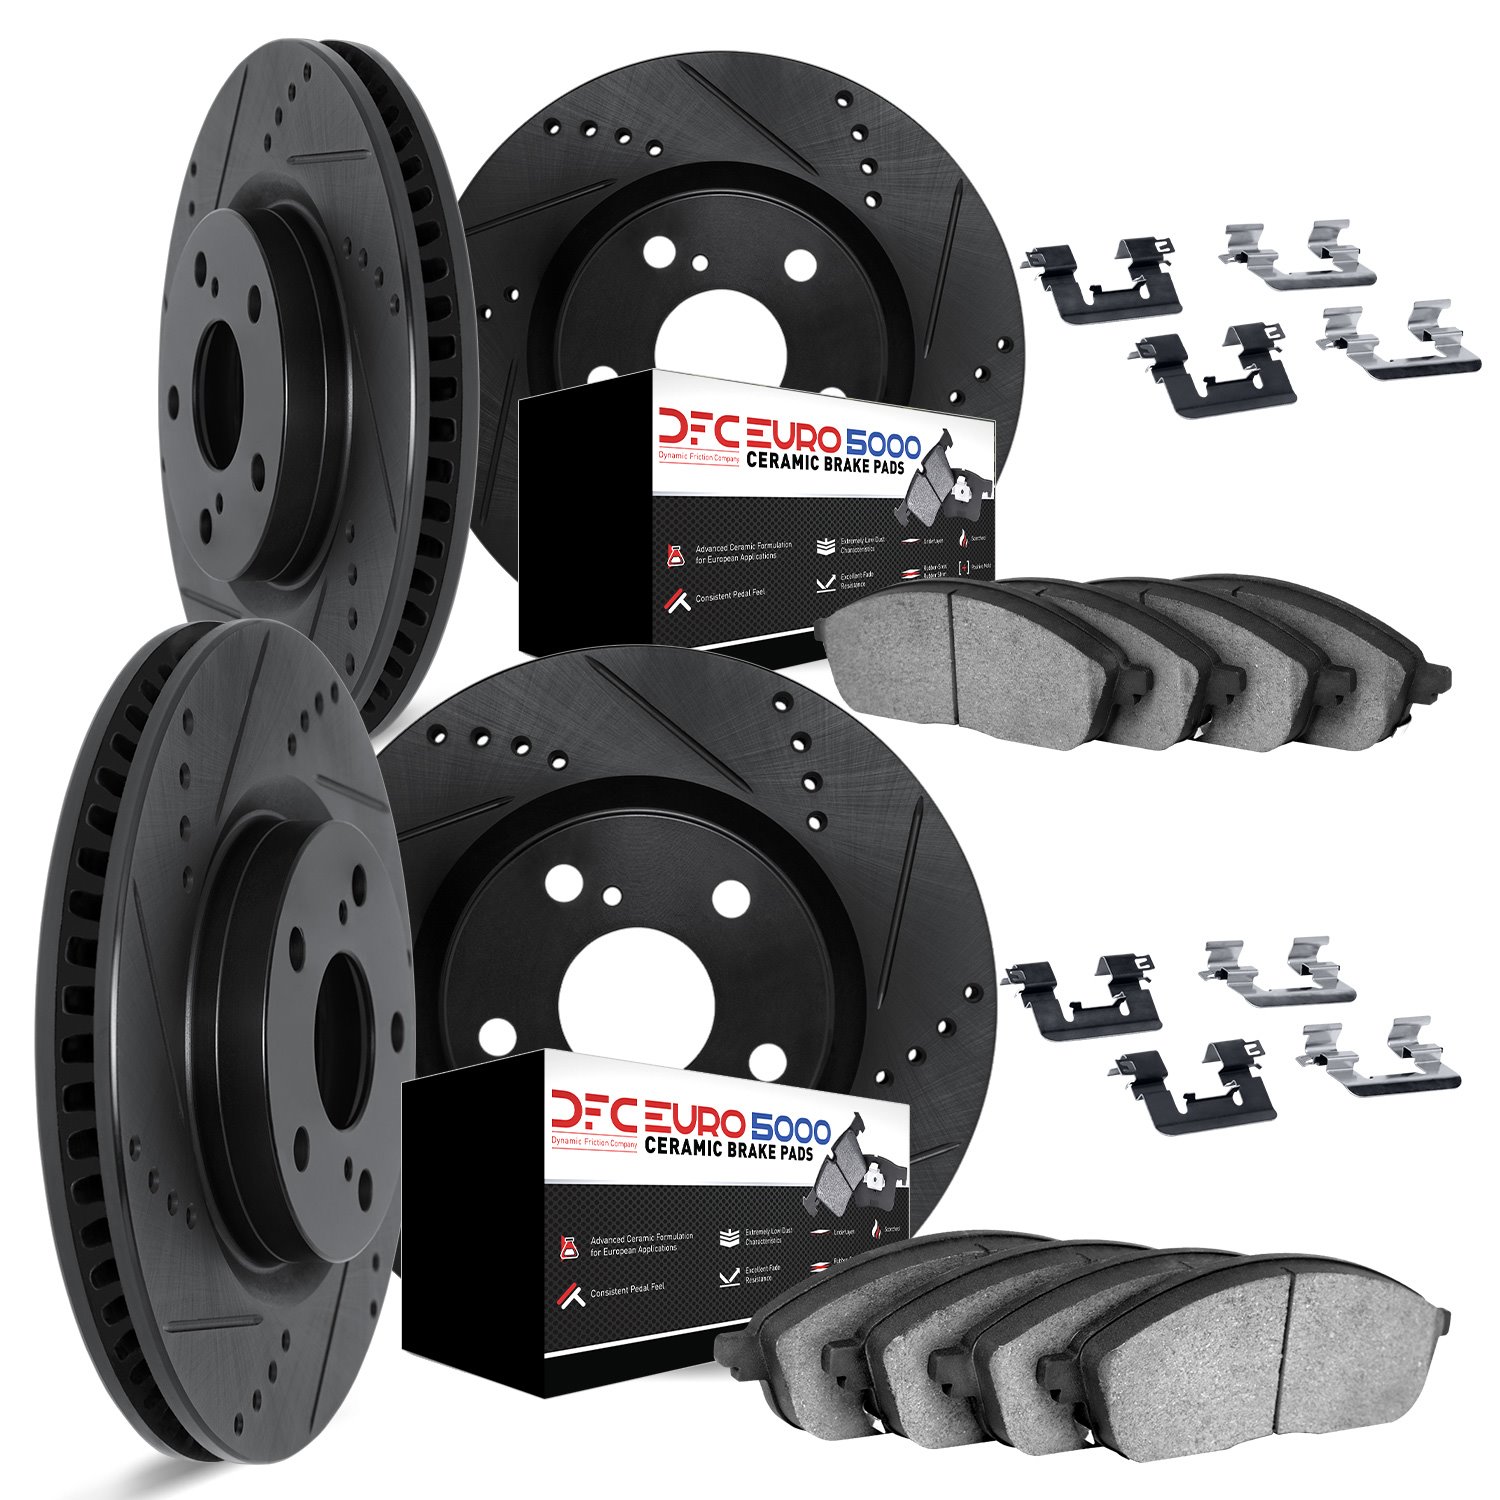 8614-46000 Drilled/Slotted Brake Rotors w/5000 Euro Ceramic Brake Pads Kit & Hardware [Black], 2005-2008 GM, Position: Front and